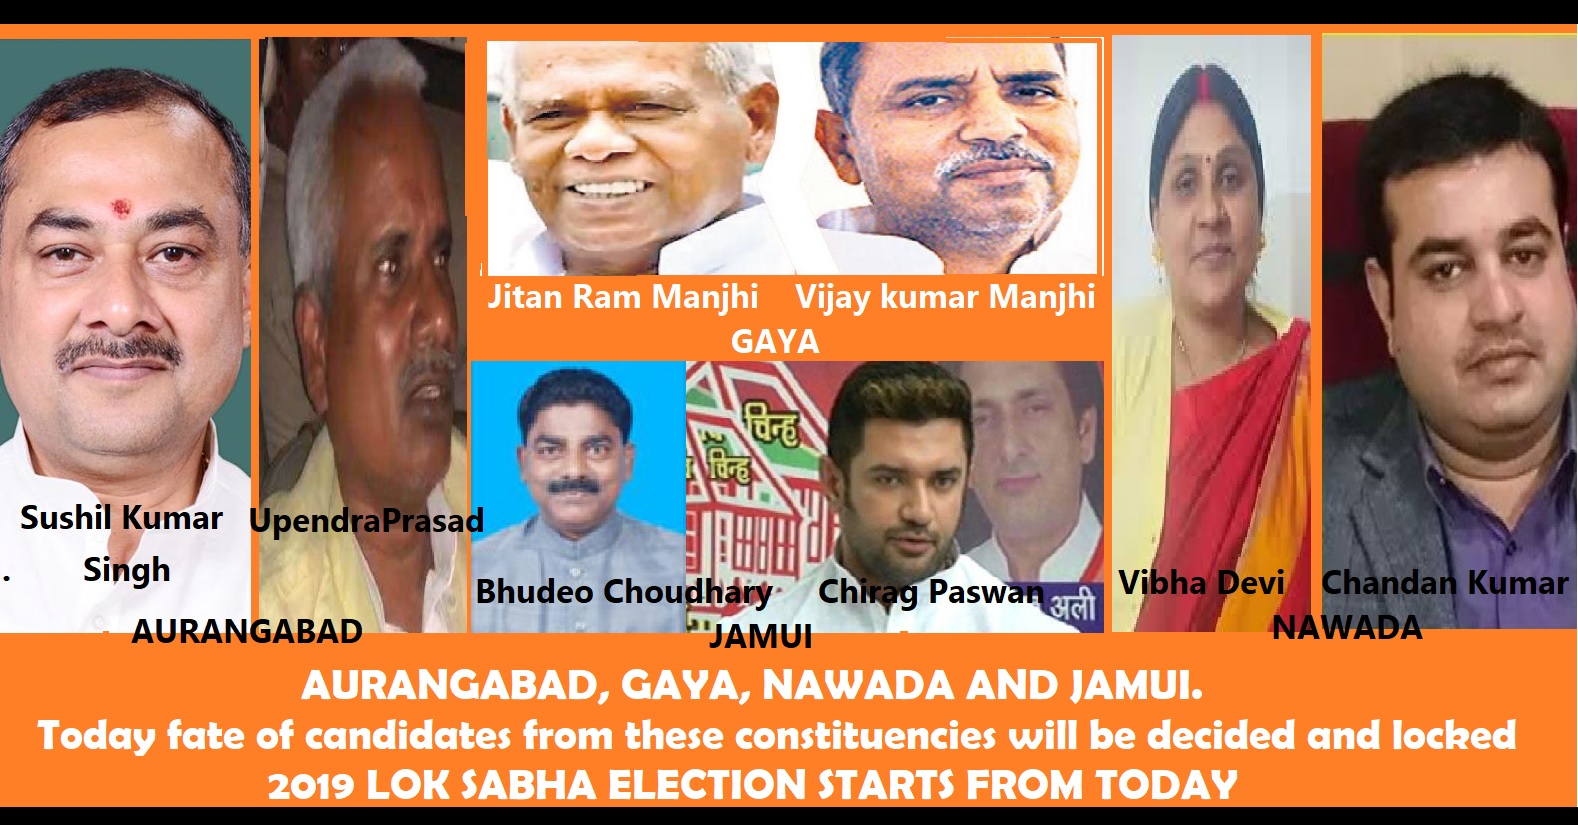 Bihar - Voters will decide fate of contestants from Gaya, Aurangabad, Nawada and Jamui. 